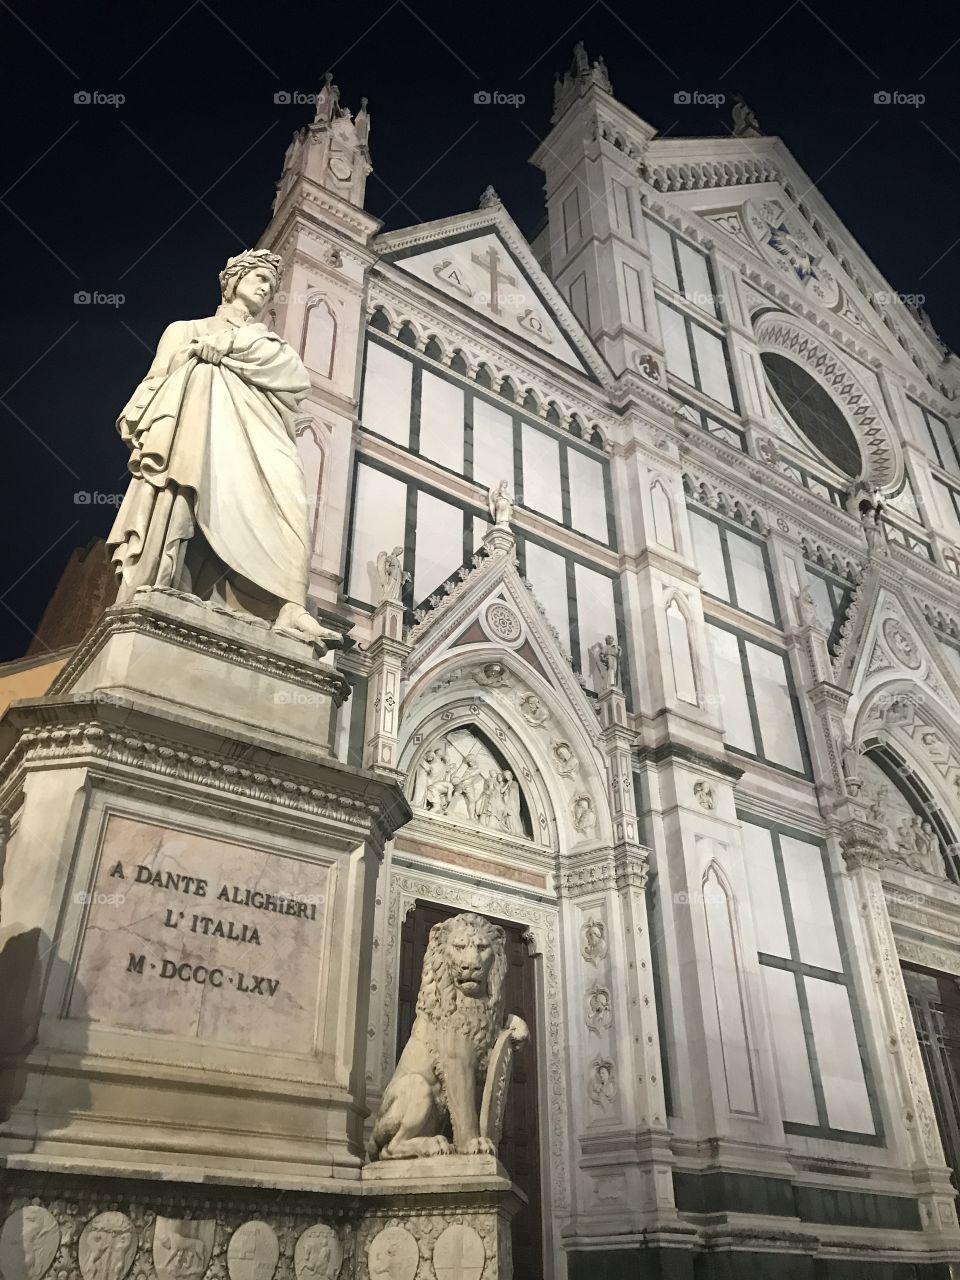 Dante Alighieri statue outside Santa Croce in Florence, Italy in the dark night.